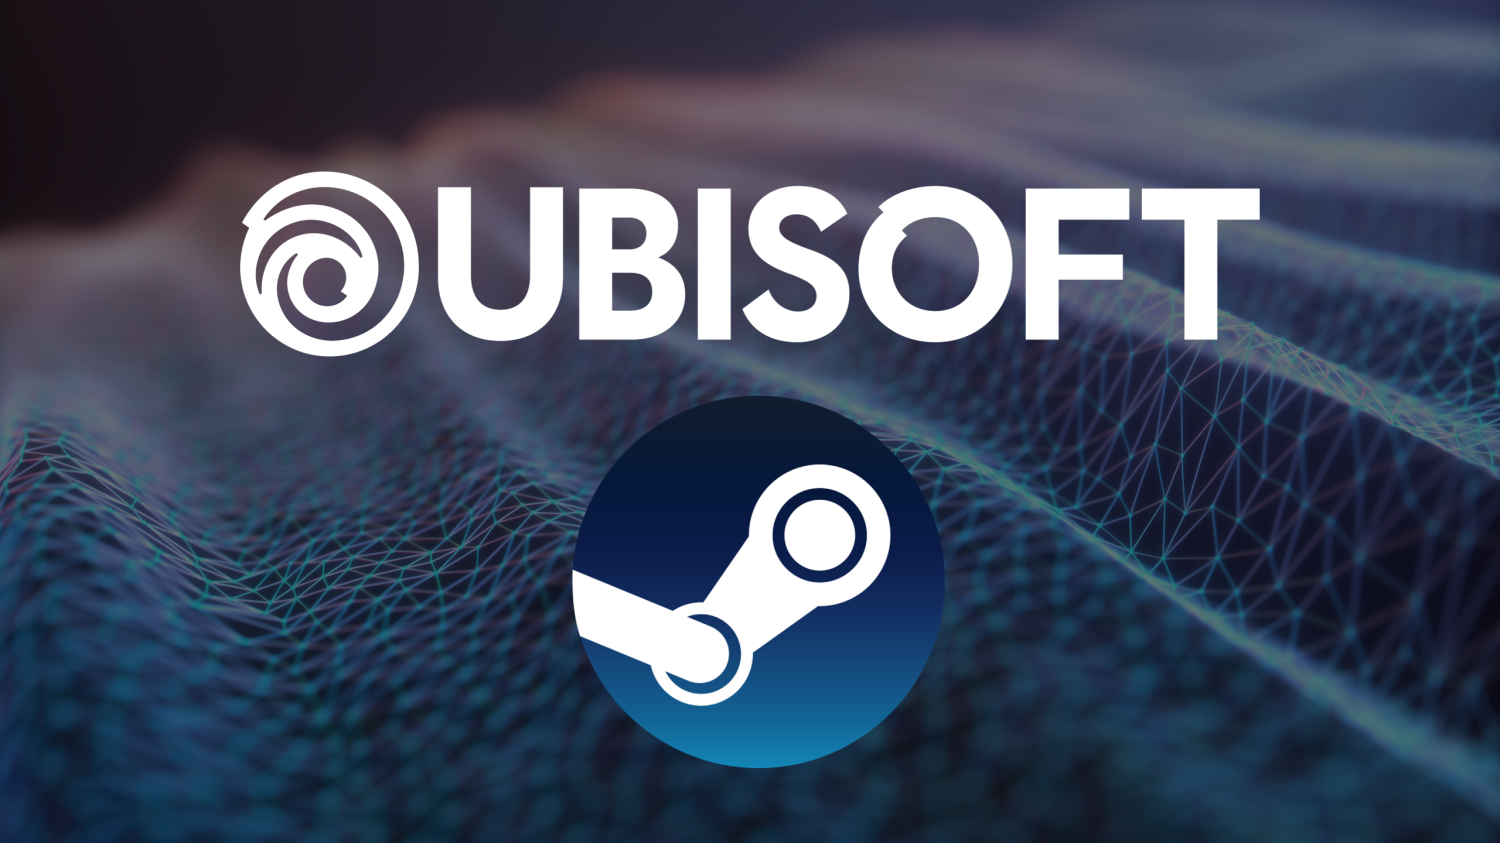 Looks like Ubisoft is returning to Steam